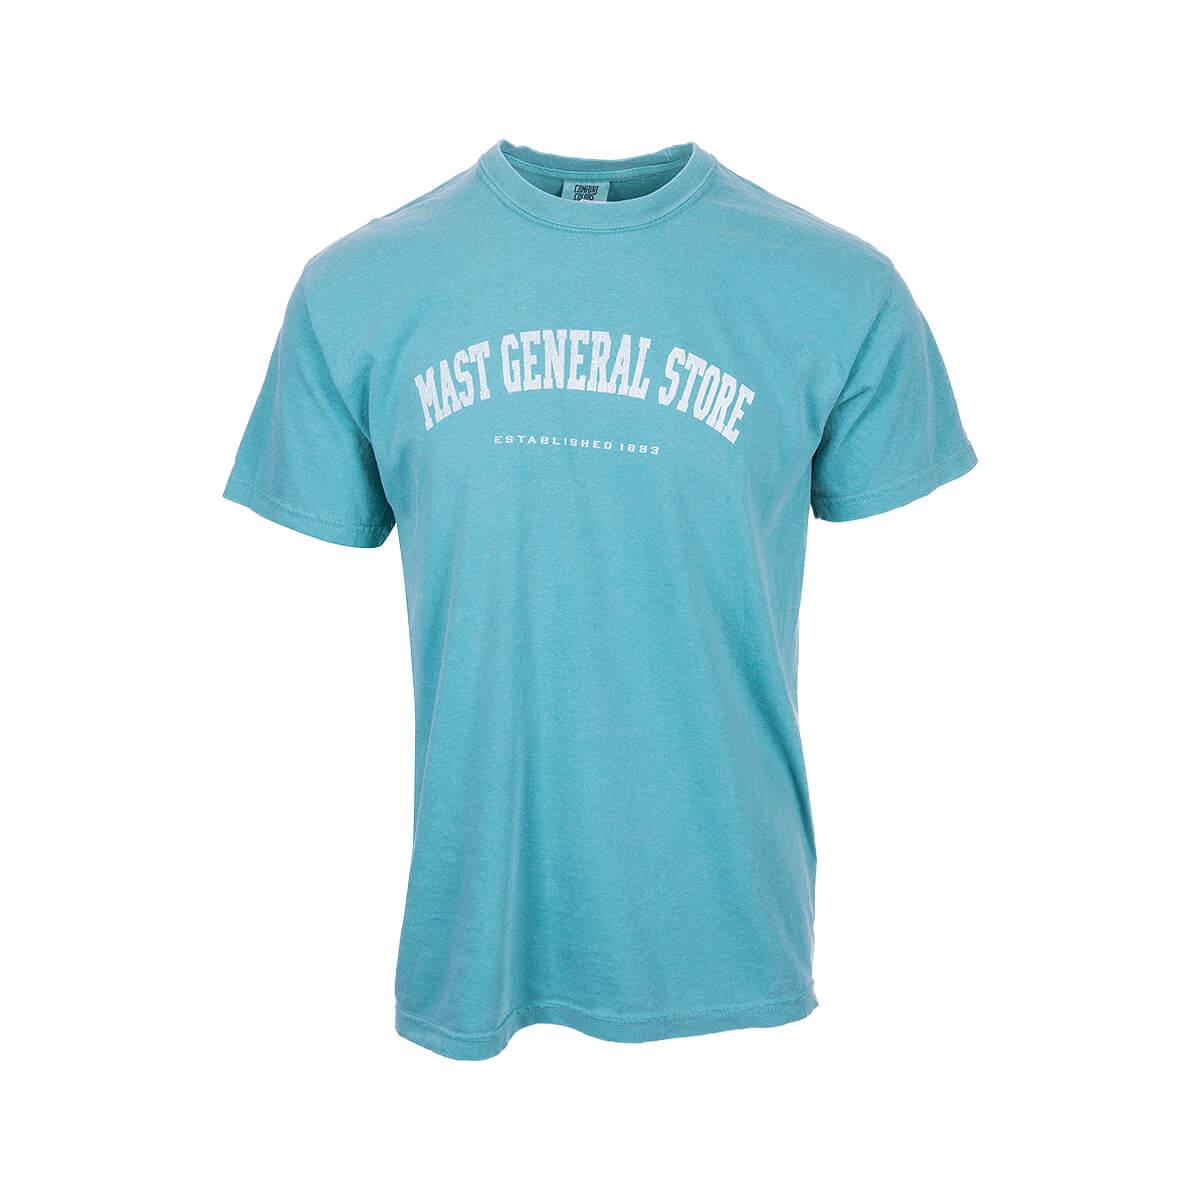  Mast General Store Est 1883 Short Sleeve T- Shirt